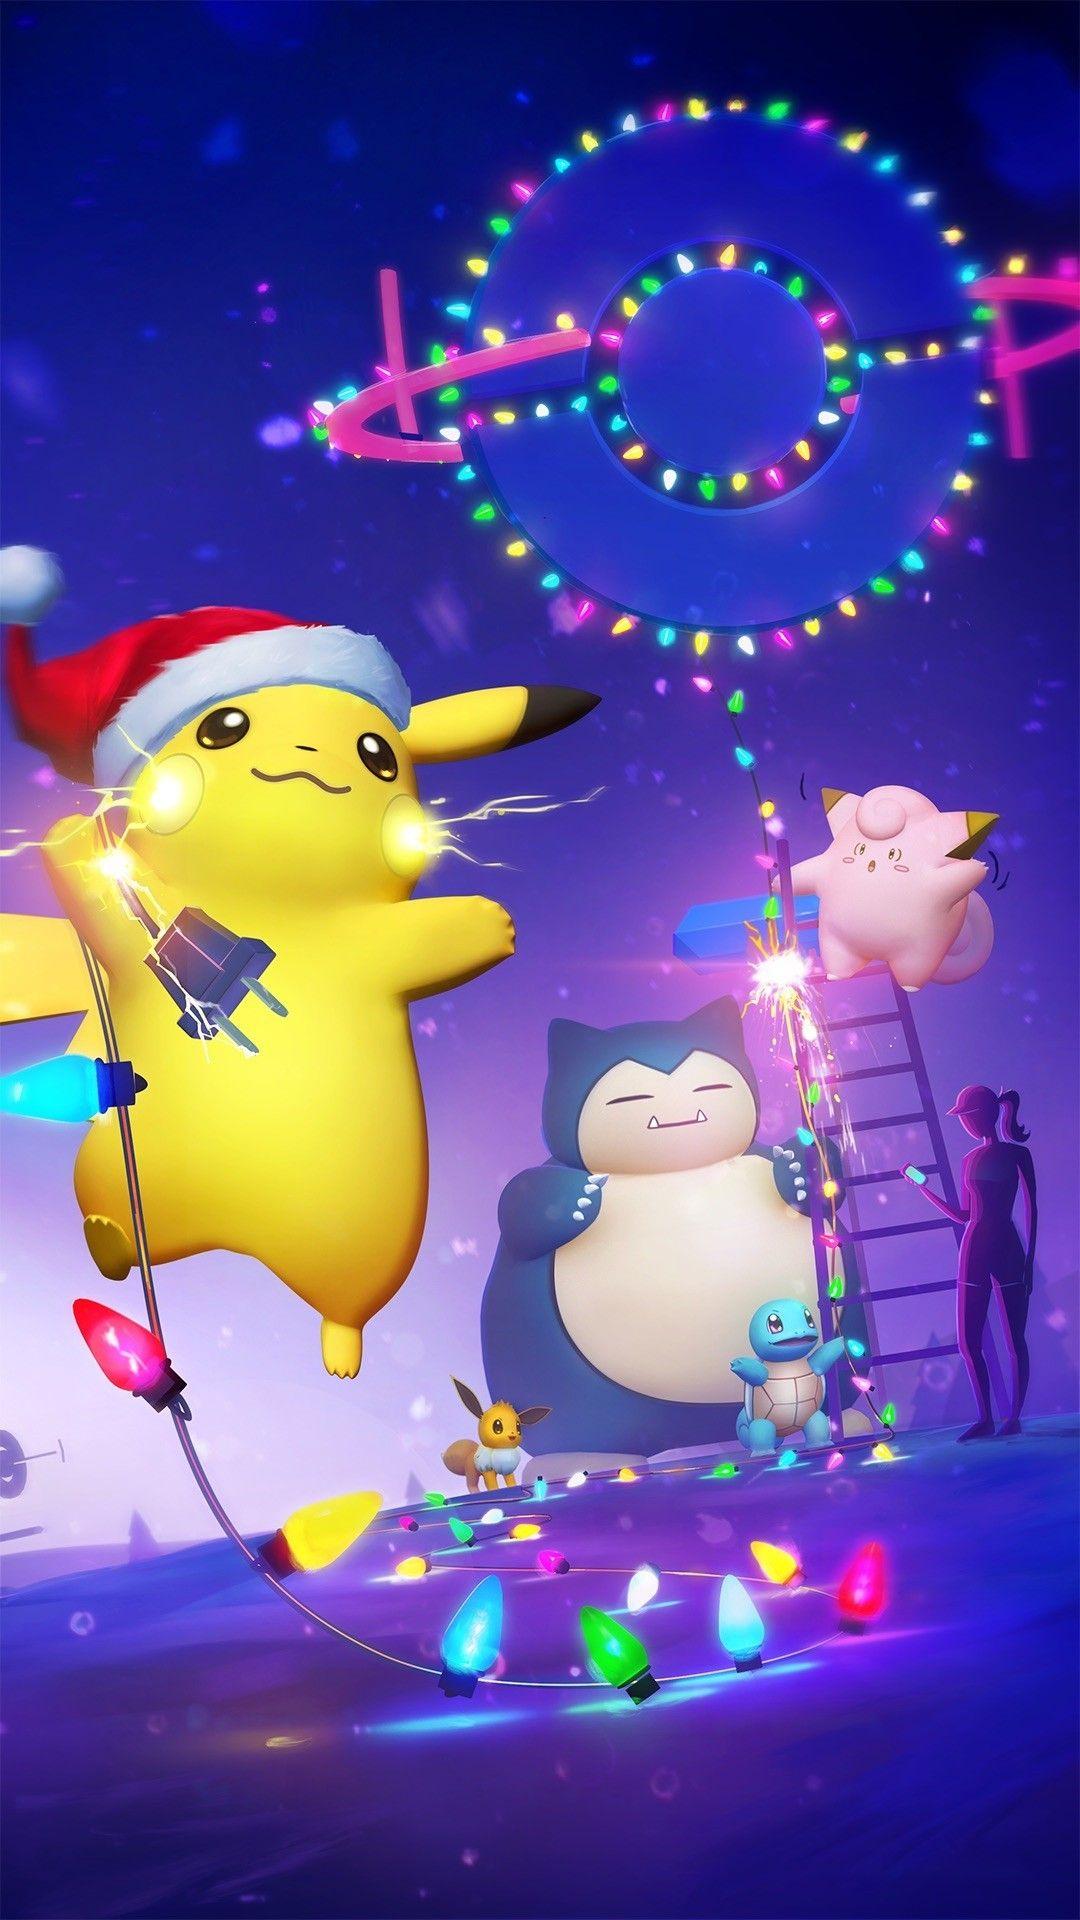 Official Pokémon Go wallpaper for 2020